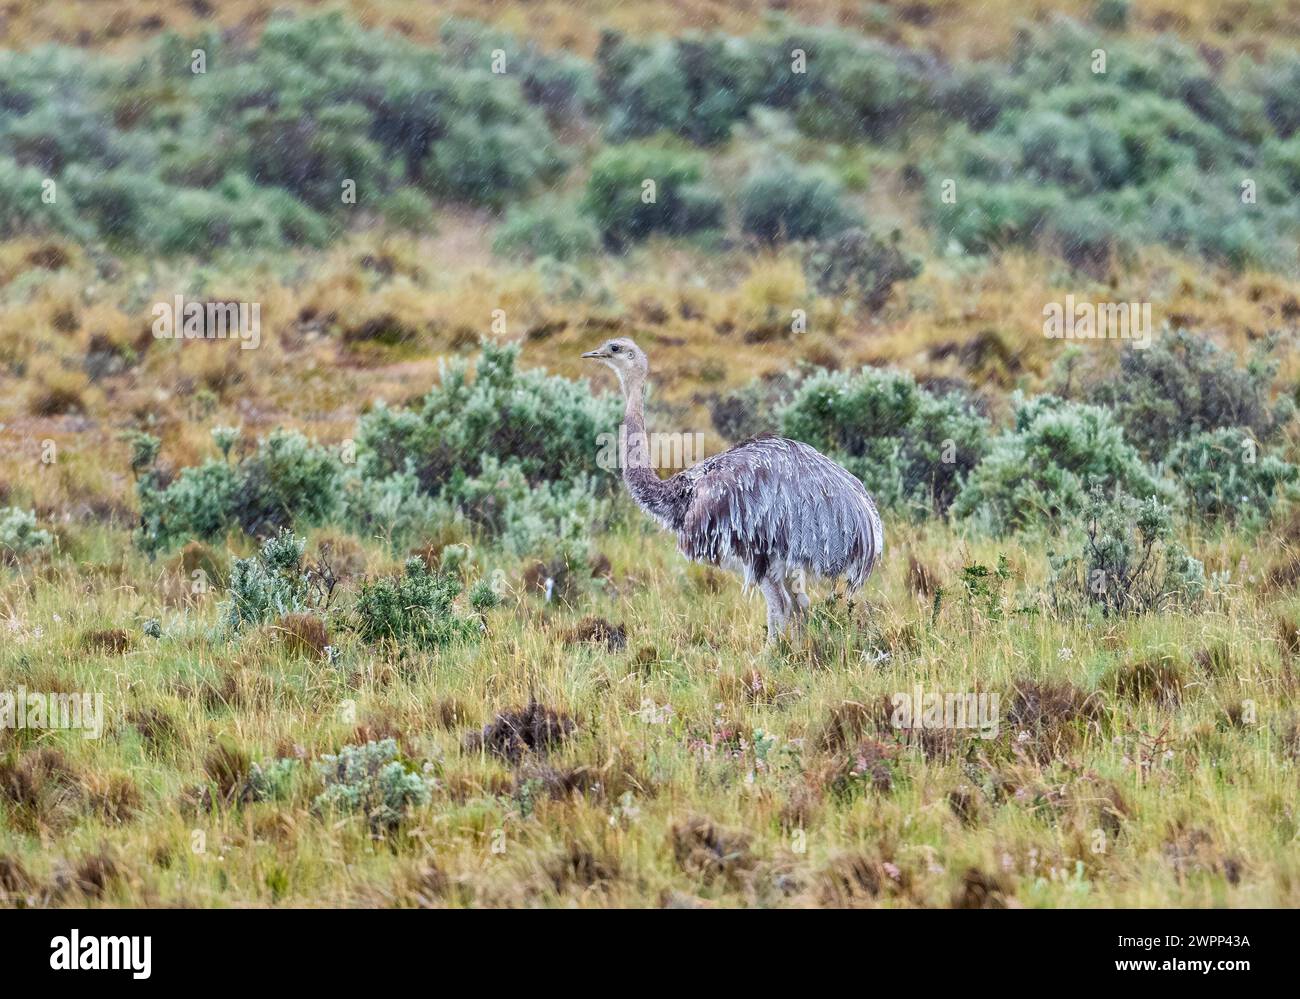 A Lesser Rhea (Rhea pennata) foraging in bushes. Punta Arenas, Chile. Stock Photo